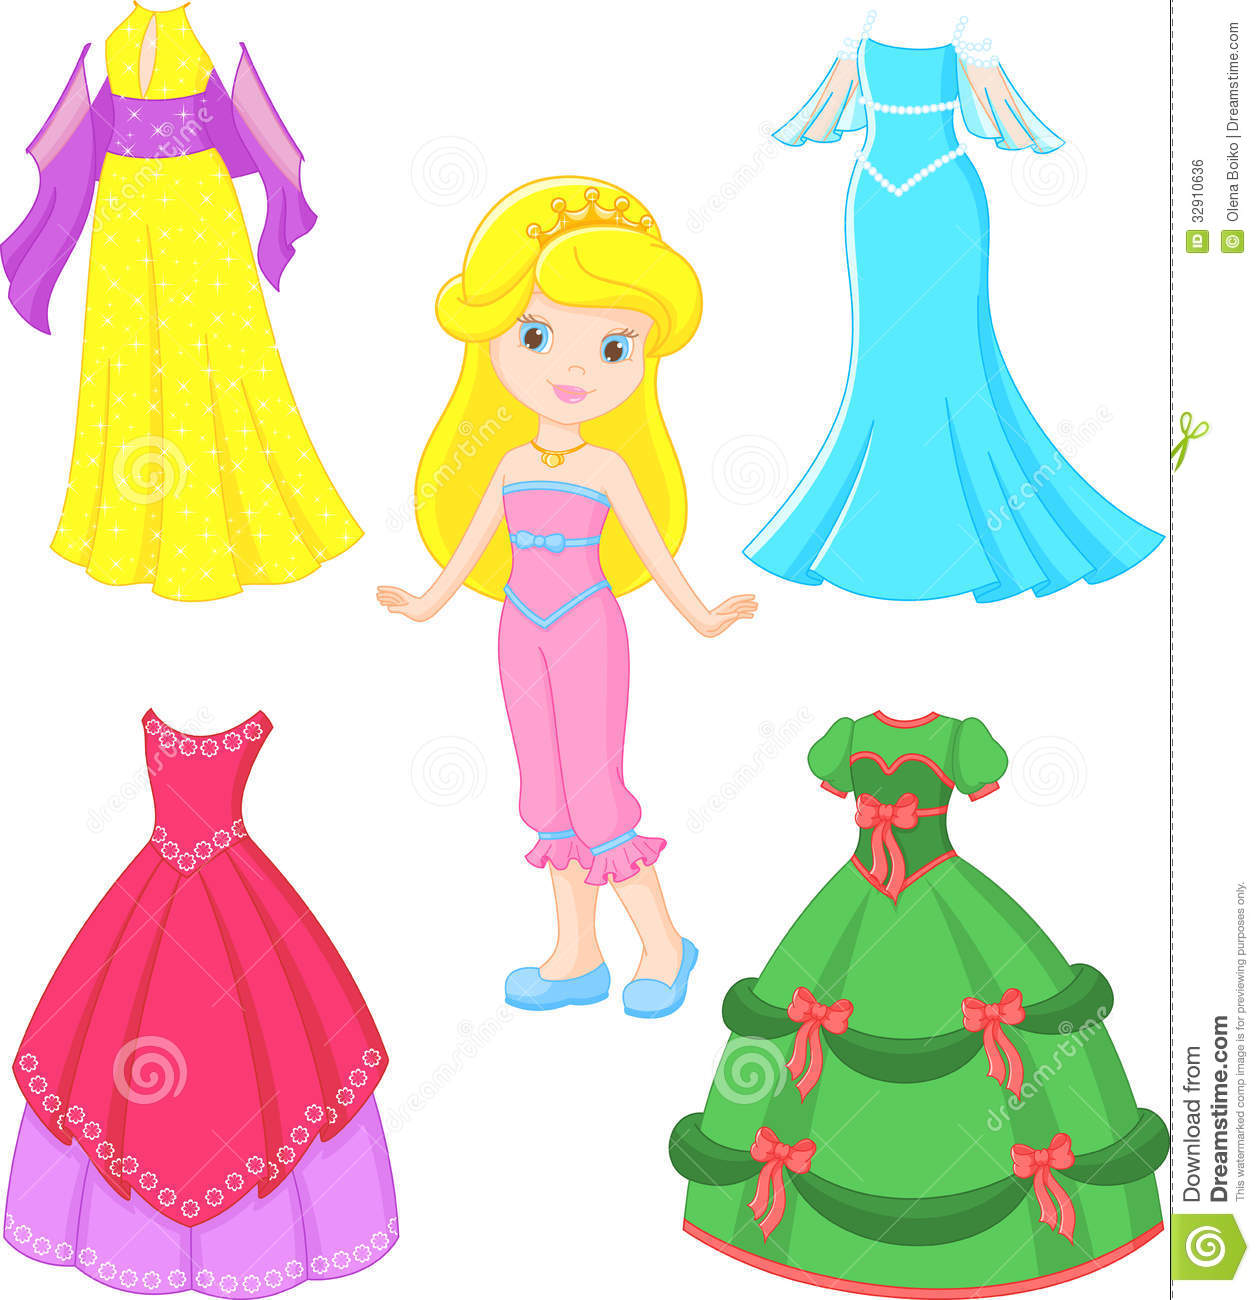 Princess Dress Clipart Princess Dress Clipartprincess Dress Royalty